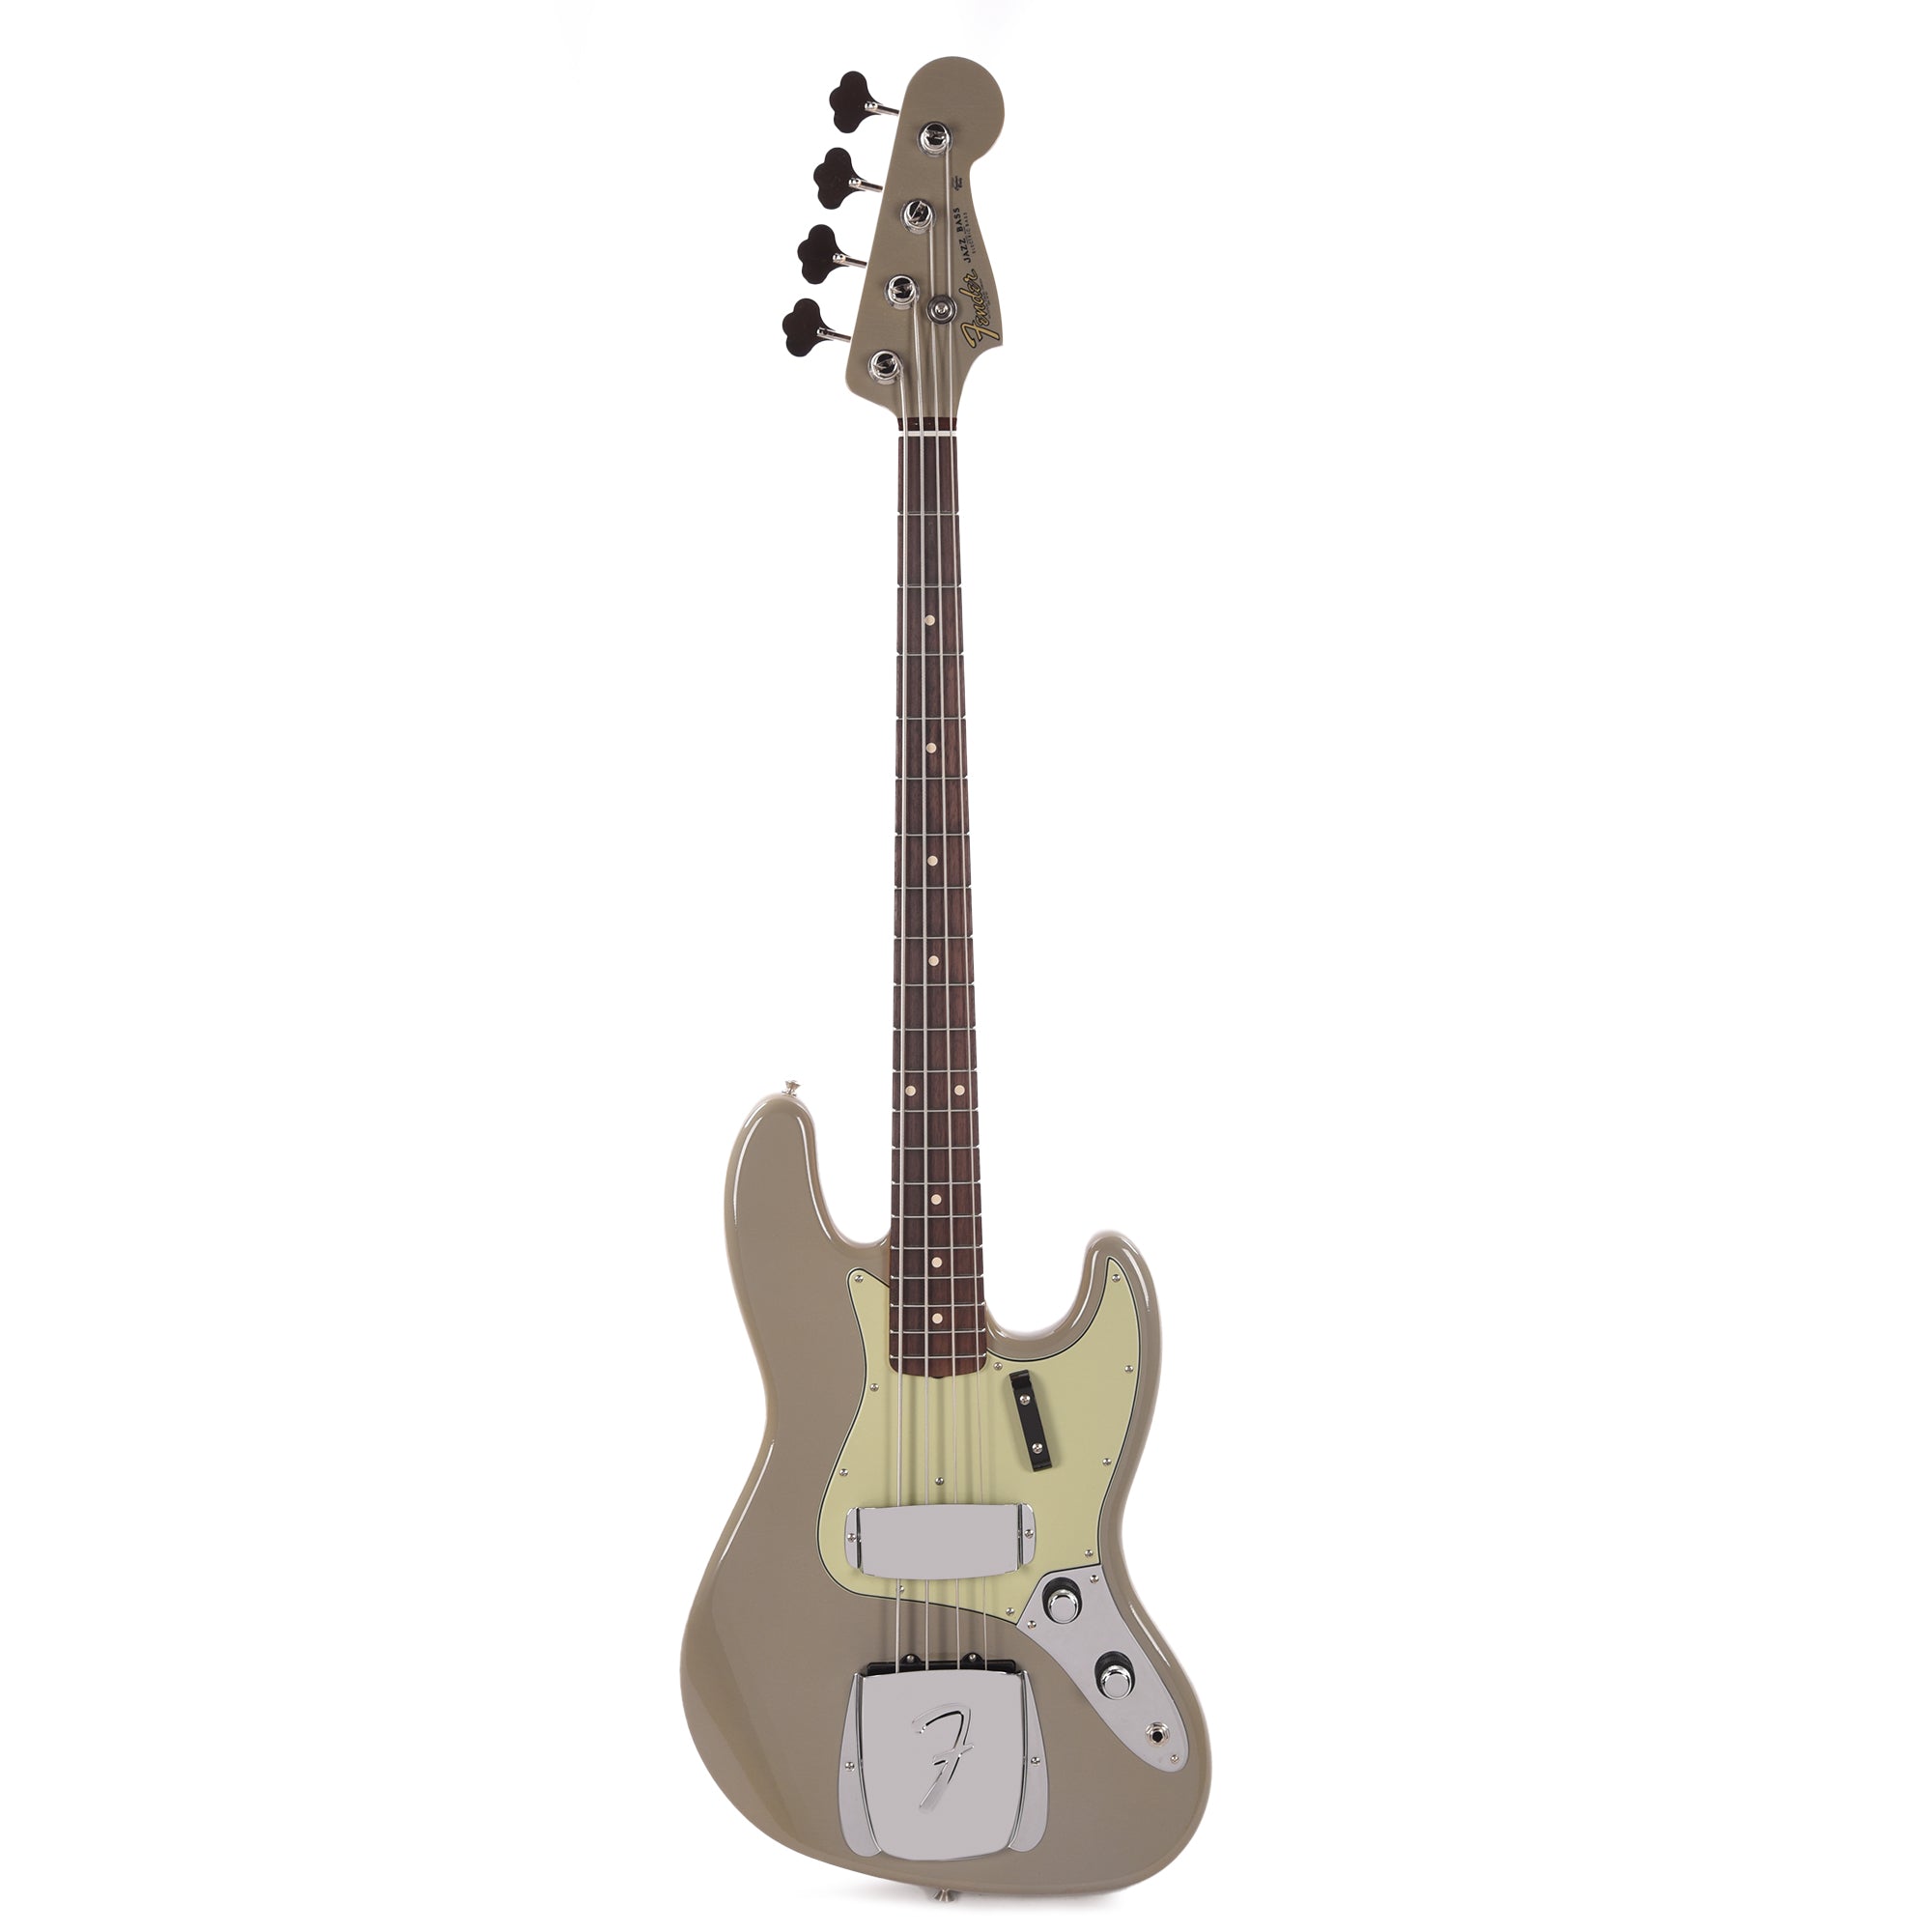 Fender Custom Shop 1960 Jazz Bass Deluxe Closet Classic Super Aged Primer Gray w/Painted Headcap